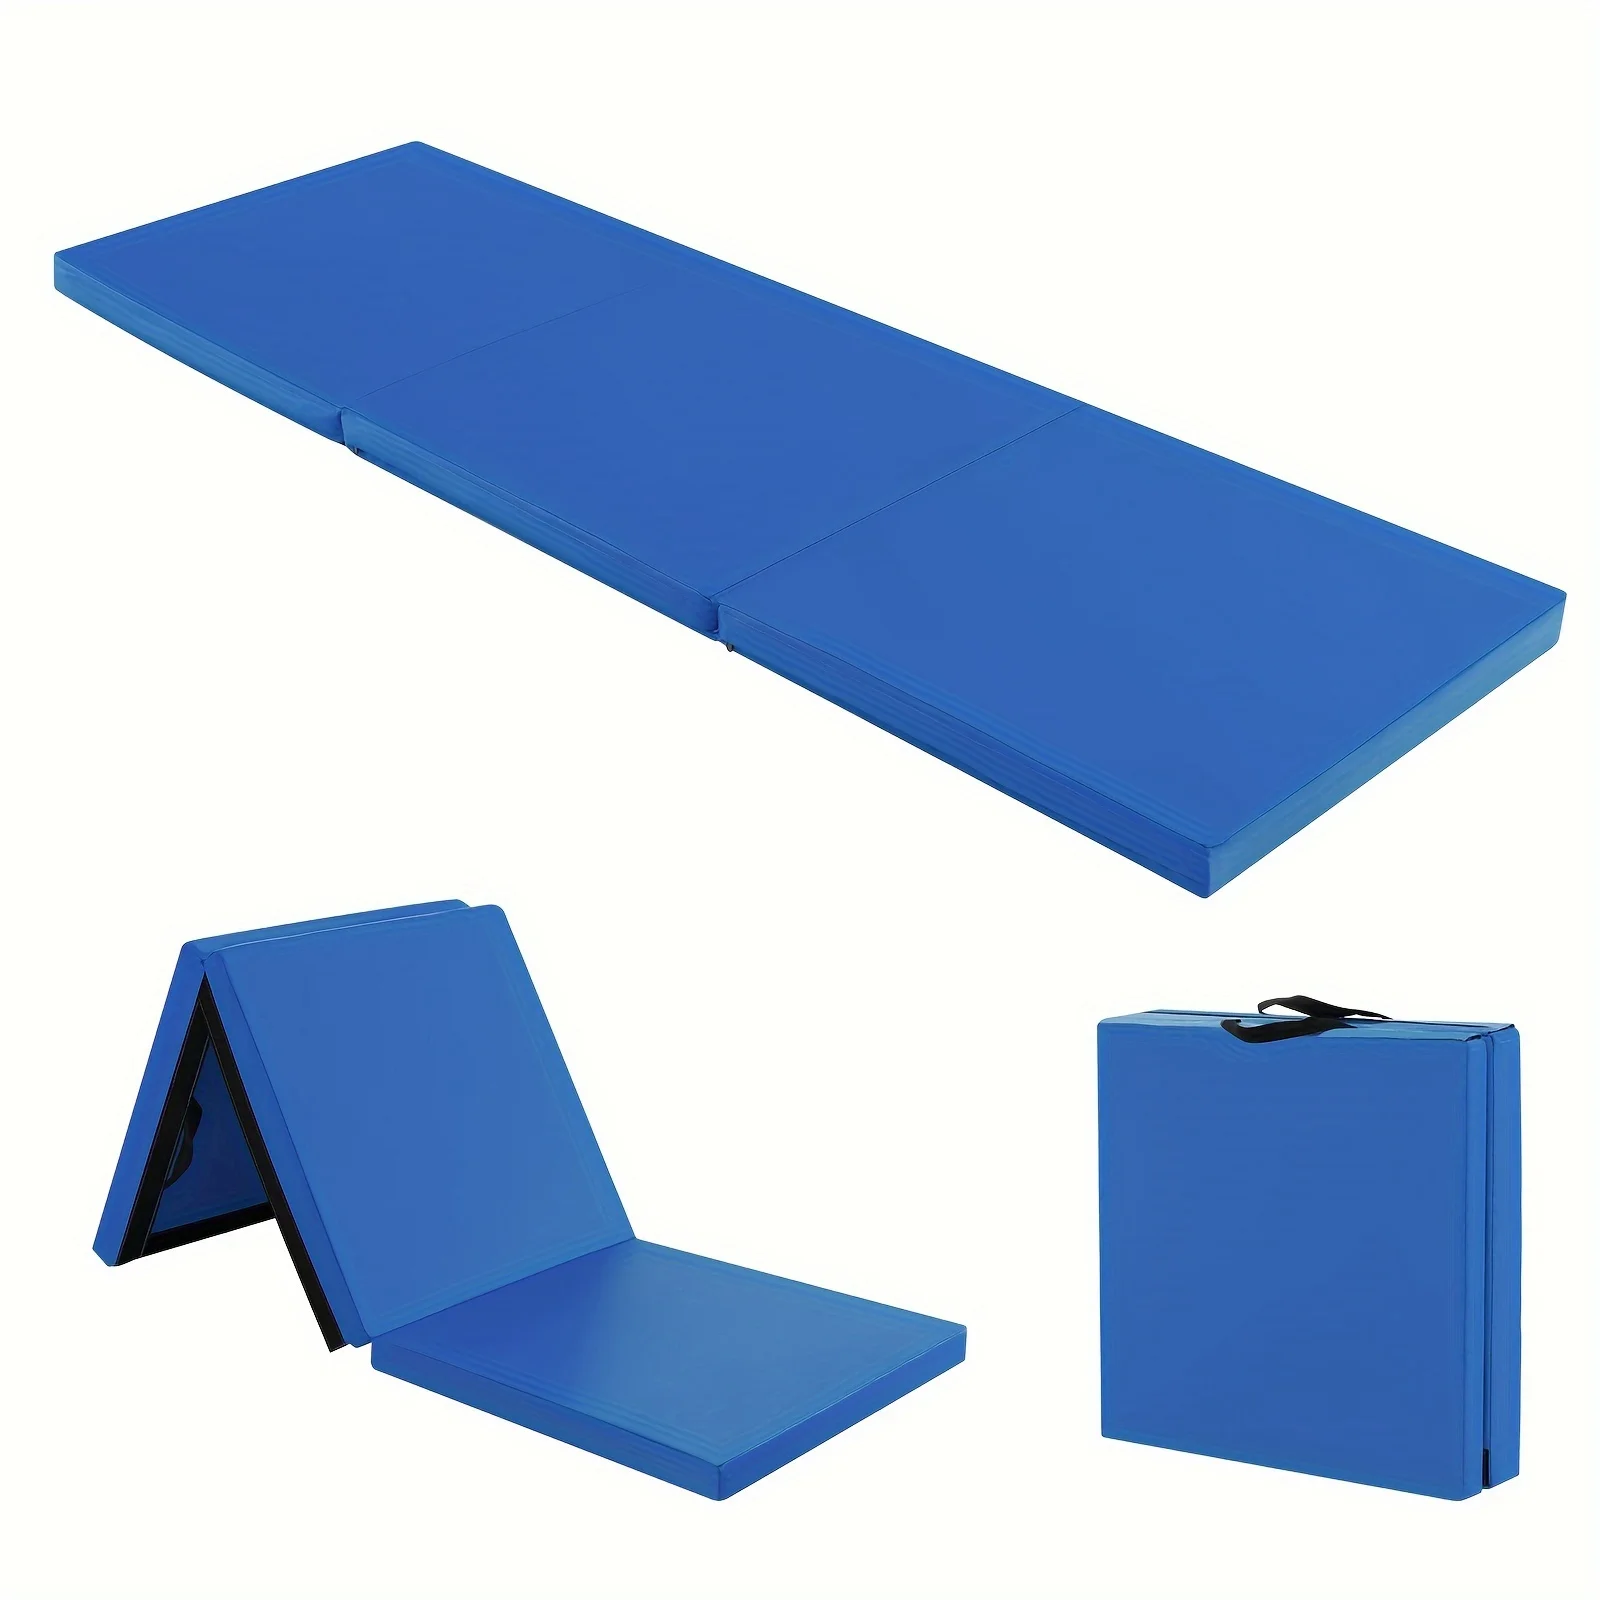 

Tri-Fold Folding Exercise Mat 6 Ft X 2 Ft Portable Gymnastics Tumbling Yoga Navy